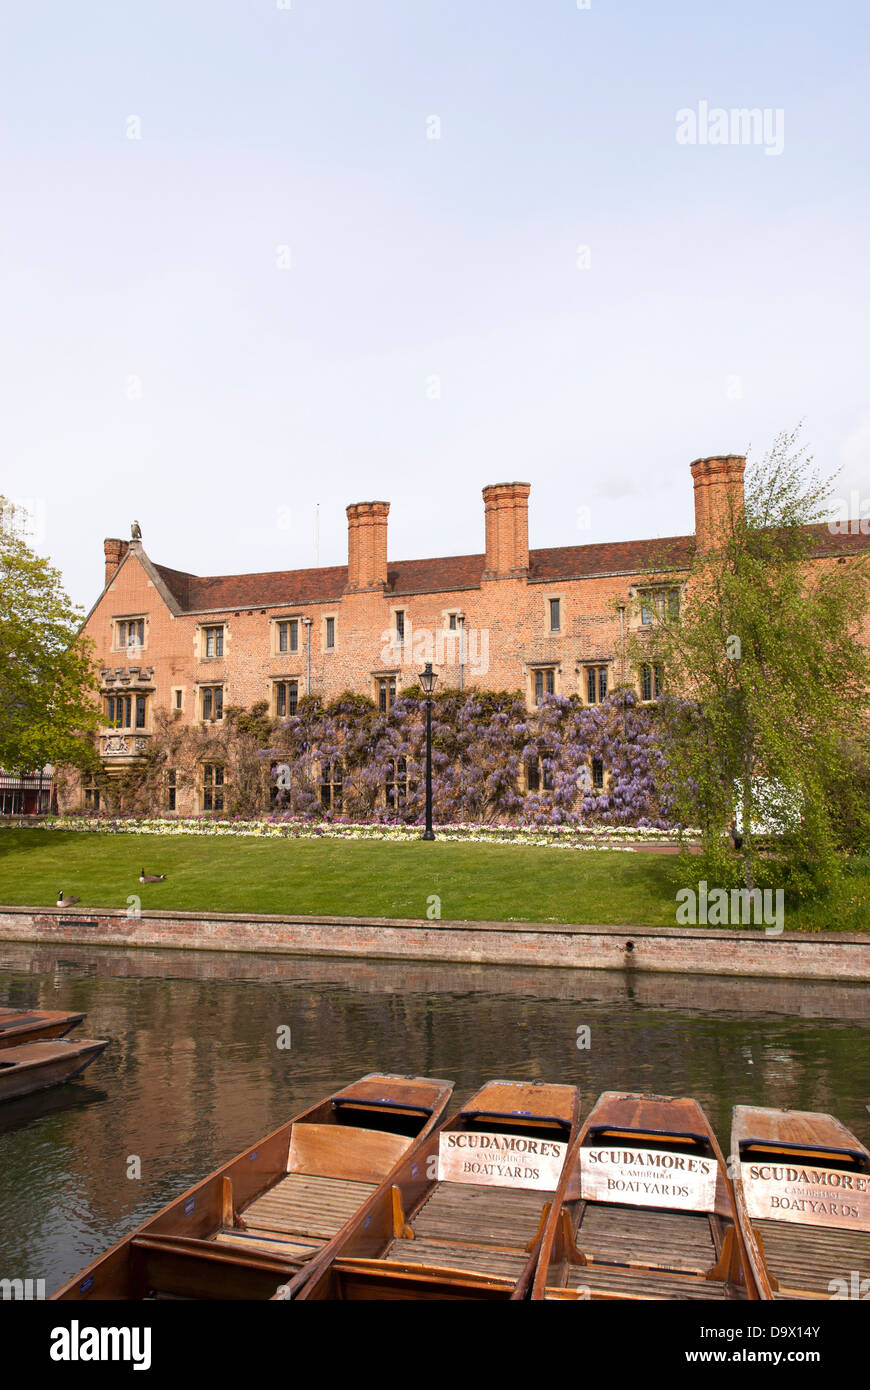 Magdalene College, Cambridge, Cambridgeshire, East Anglia, England. Stock Photo